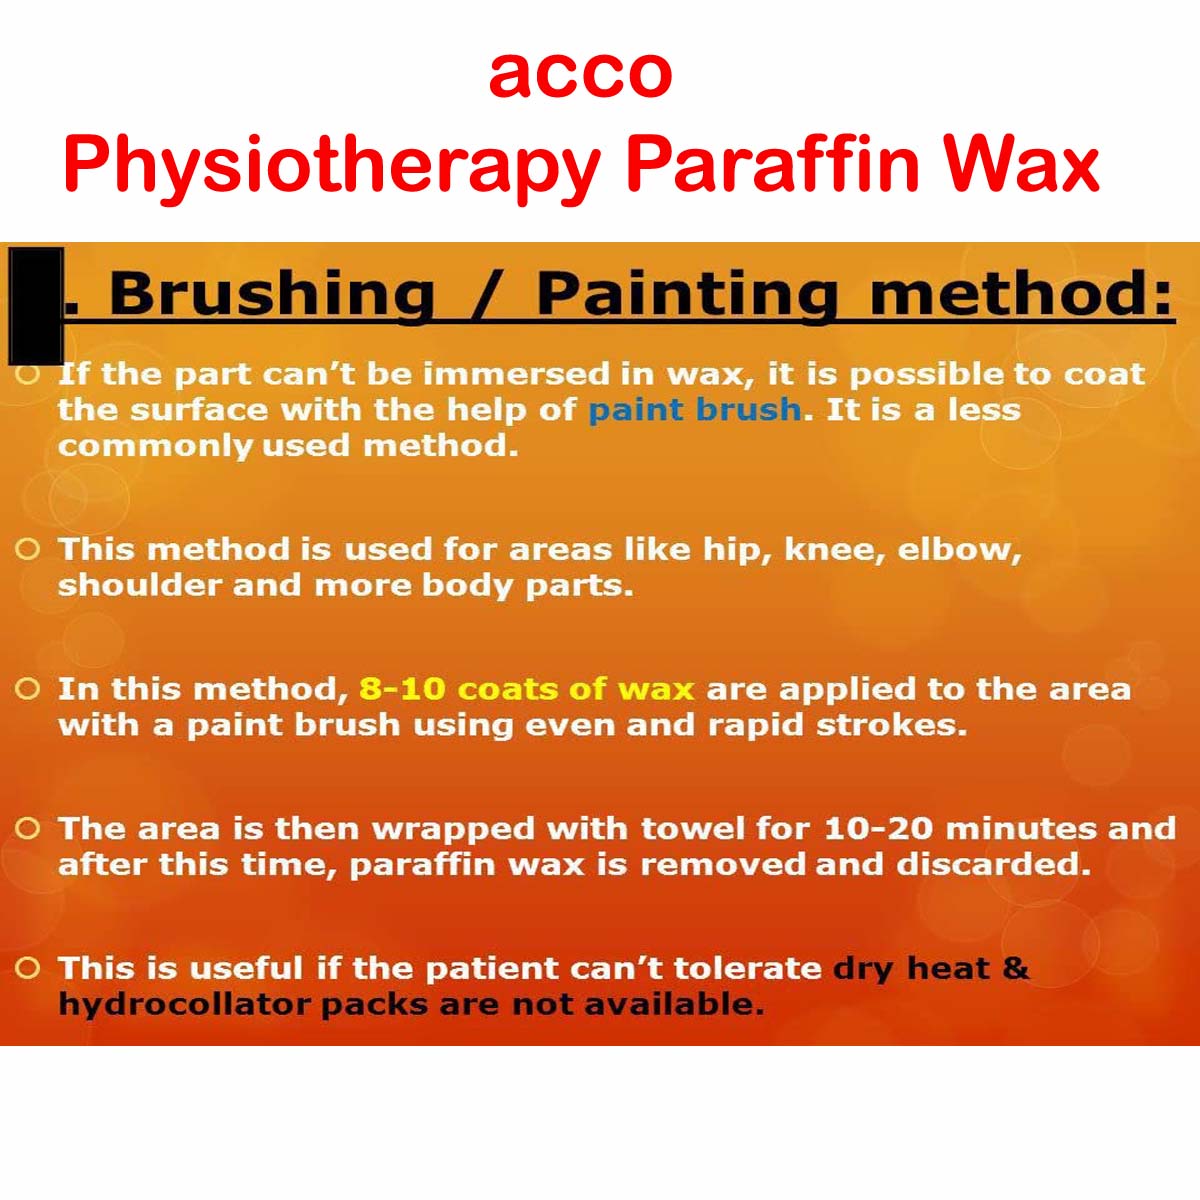 Acco Physio Wax - Paraffin Wax